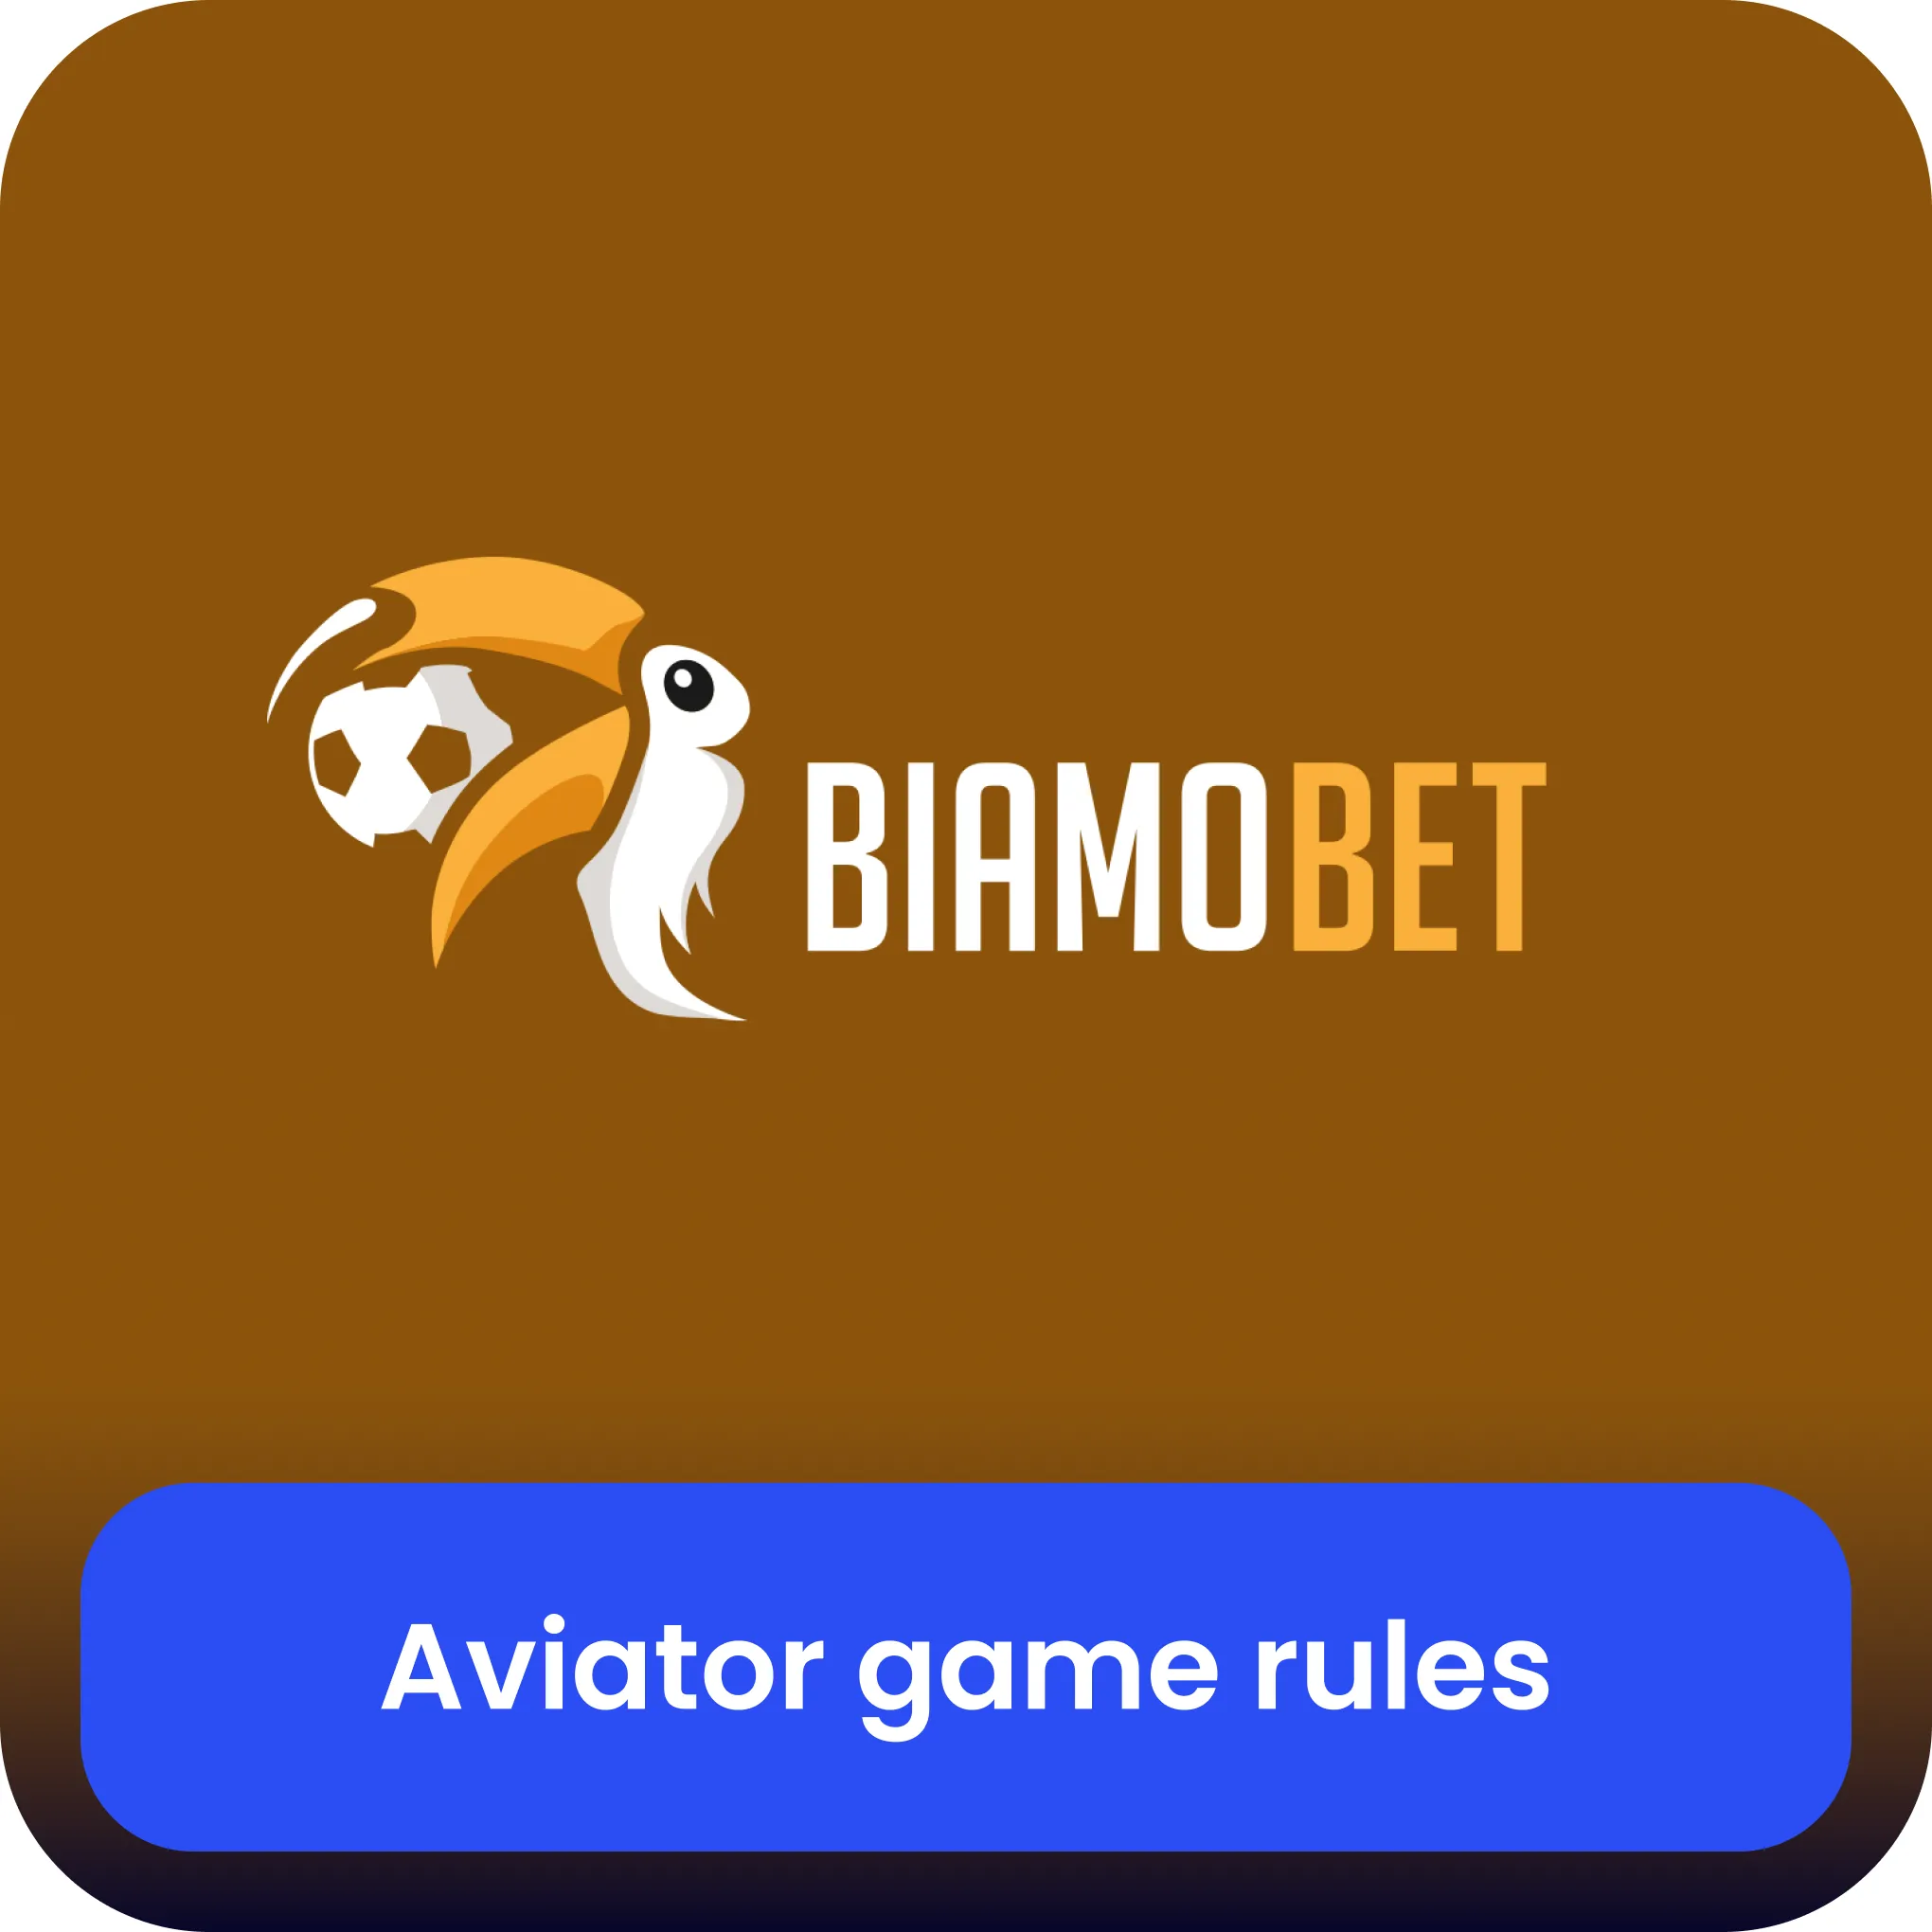 biamobet aviator game rules